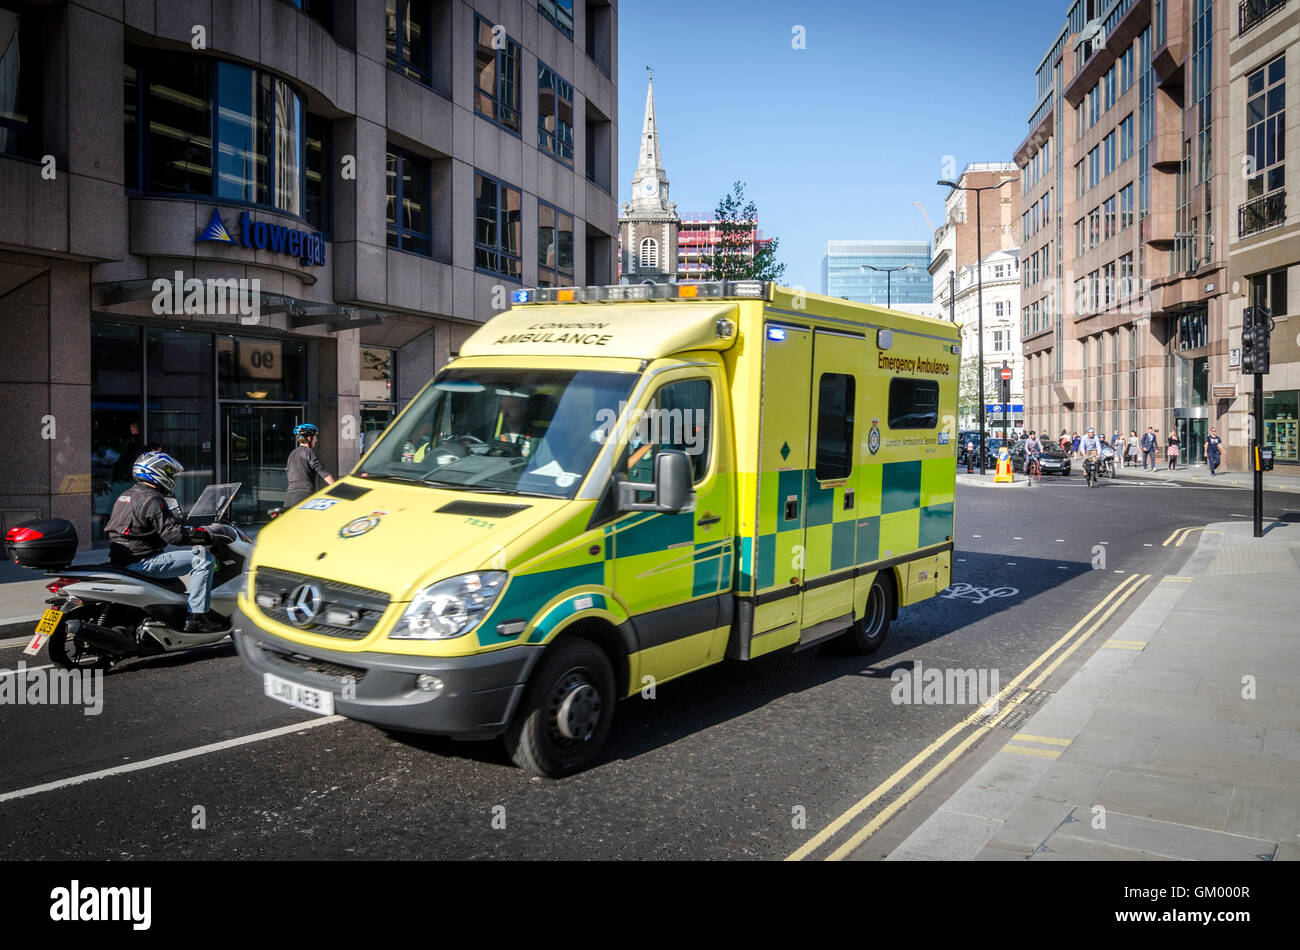 Ambulance in London Stock Photo